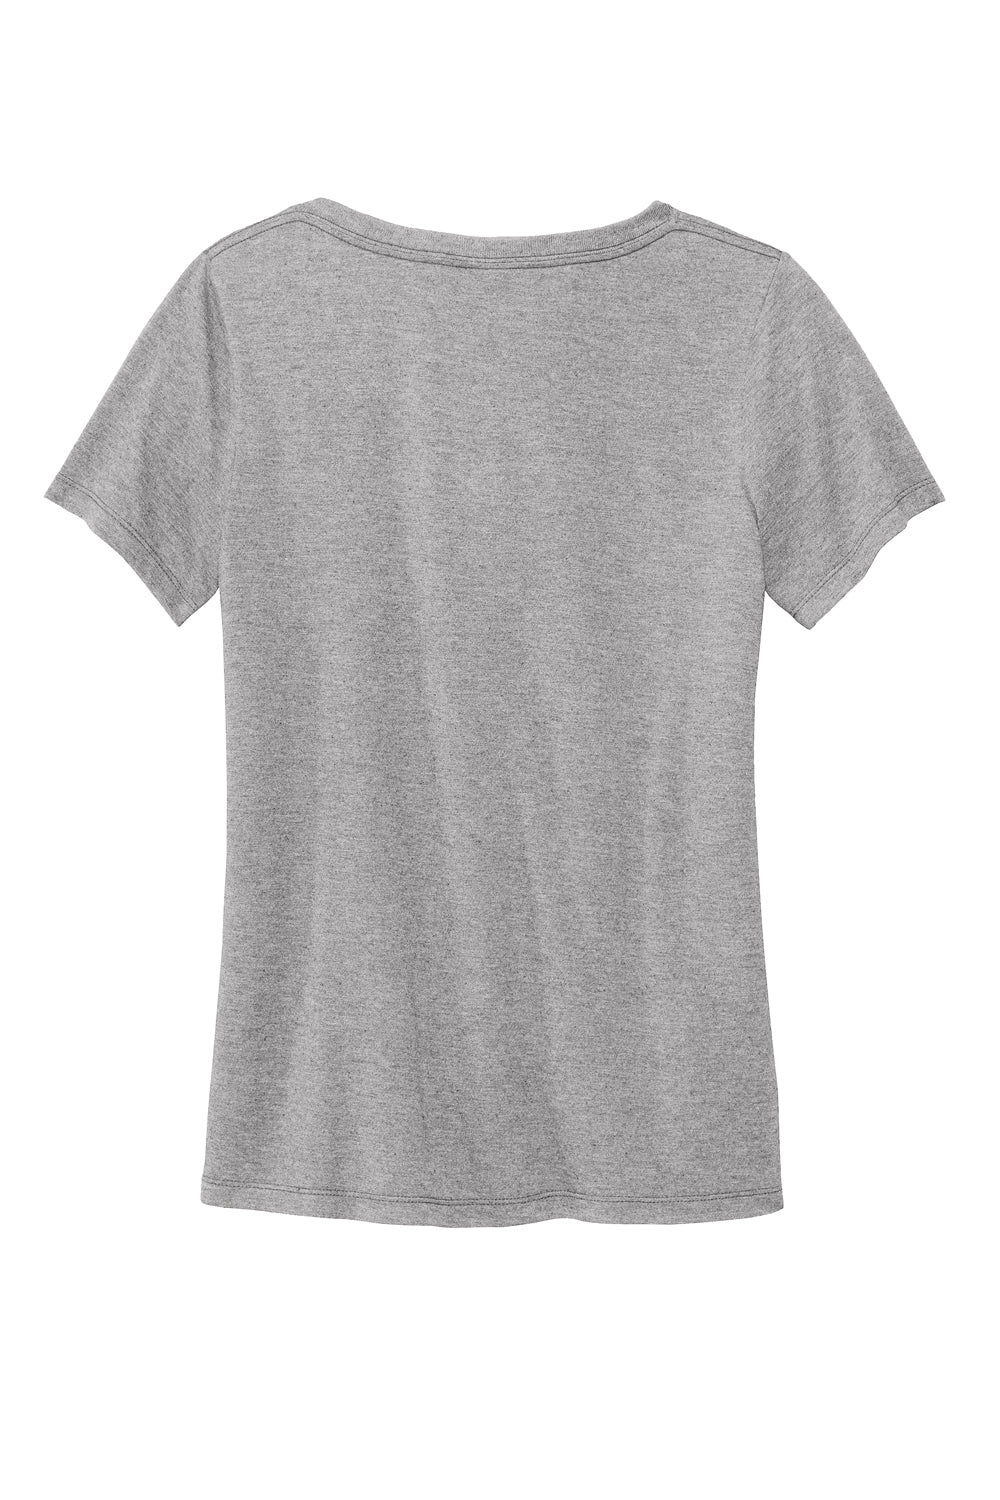 Volunteer Knitwear LVL45V USA Made Daily Short Sleeve V-Neck T-Shirt Heather Grey Flat Back